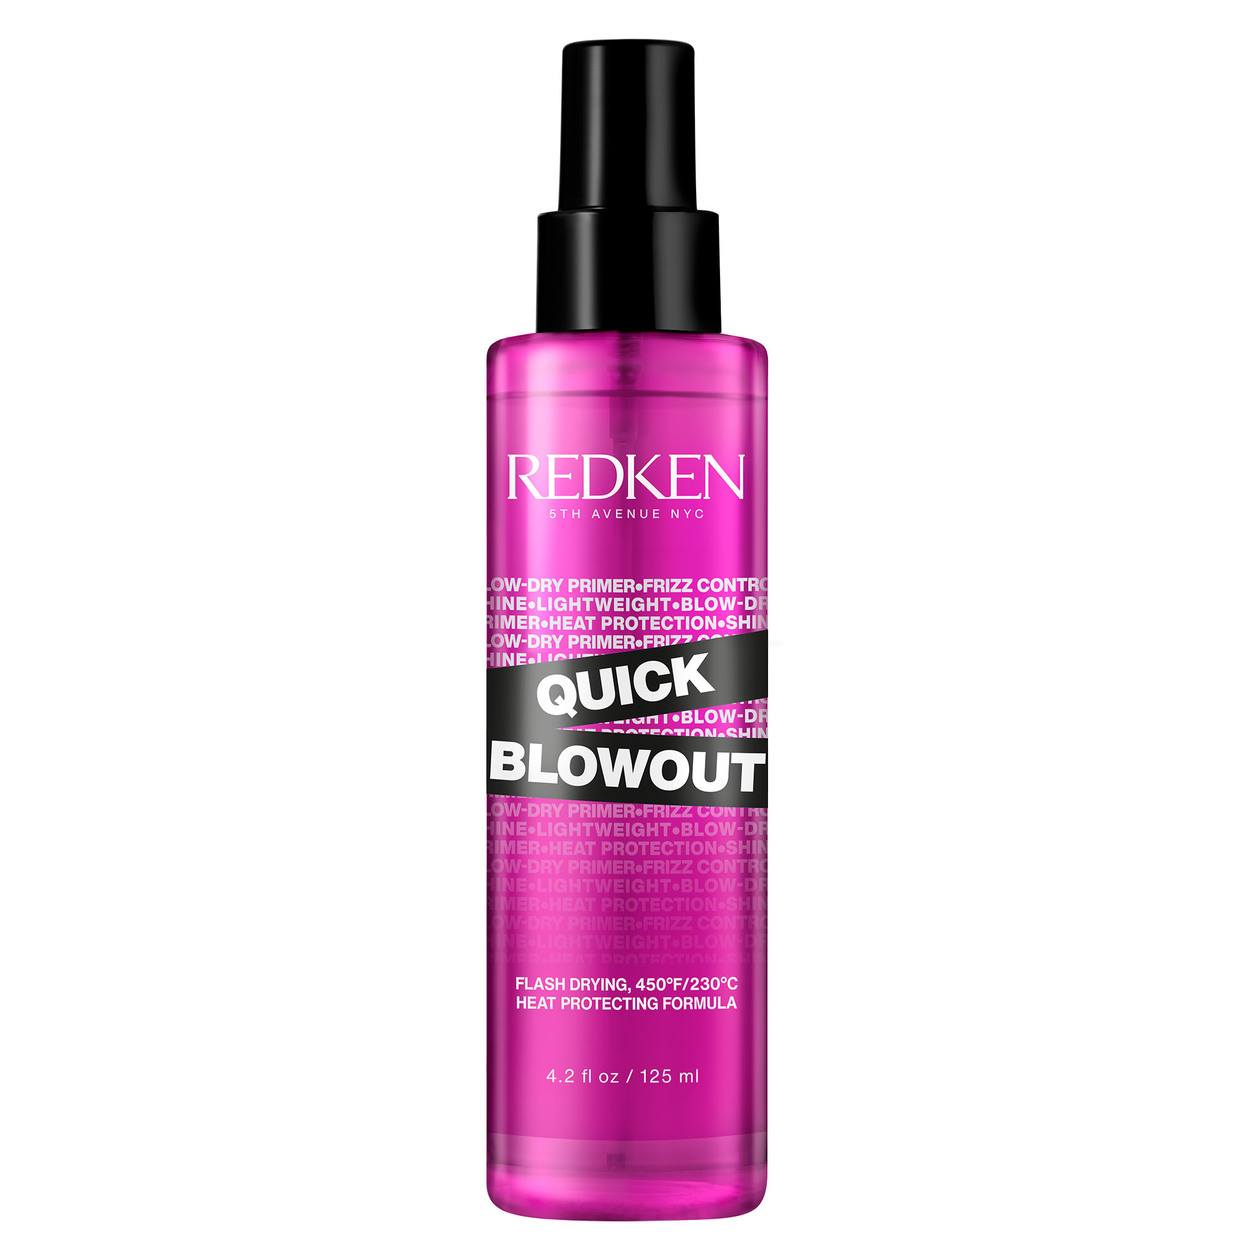 Redken Quick Blowout Lightweight Blow Dry Primer Spray 125ml - Salon Warehouse